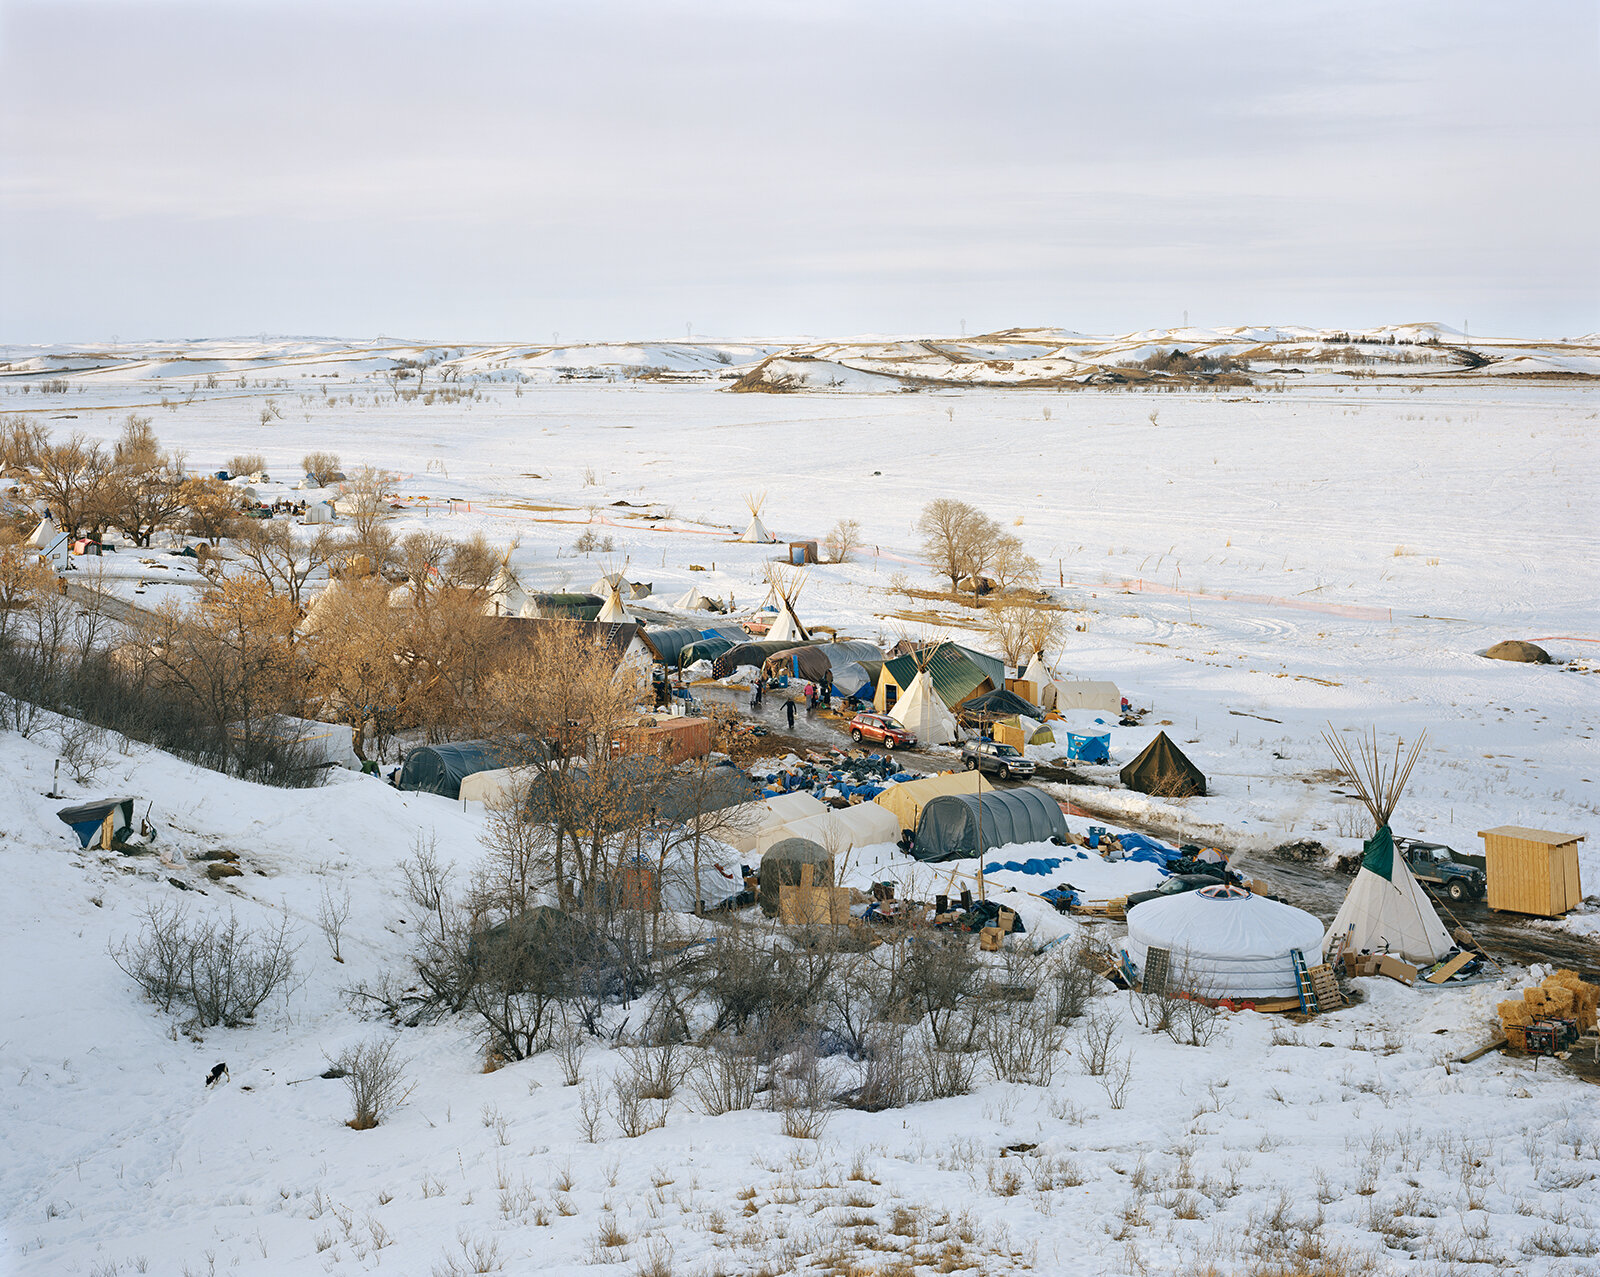 Sacred Stone Camp, Standing Rock Sioux Reservation, North Dakota 2017 @ Mitch Epstein